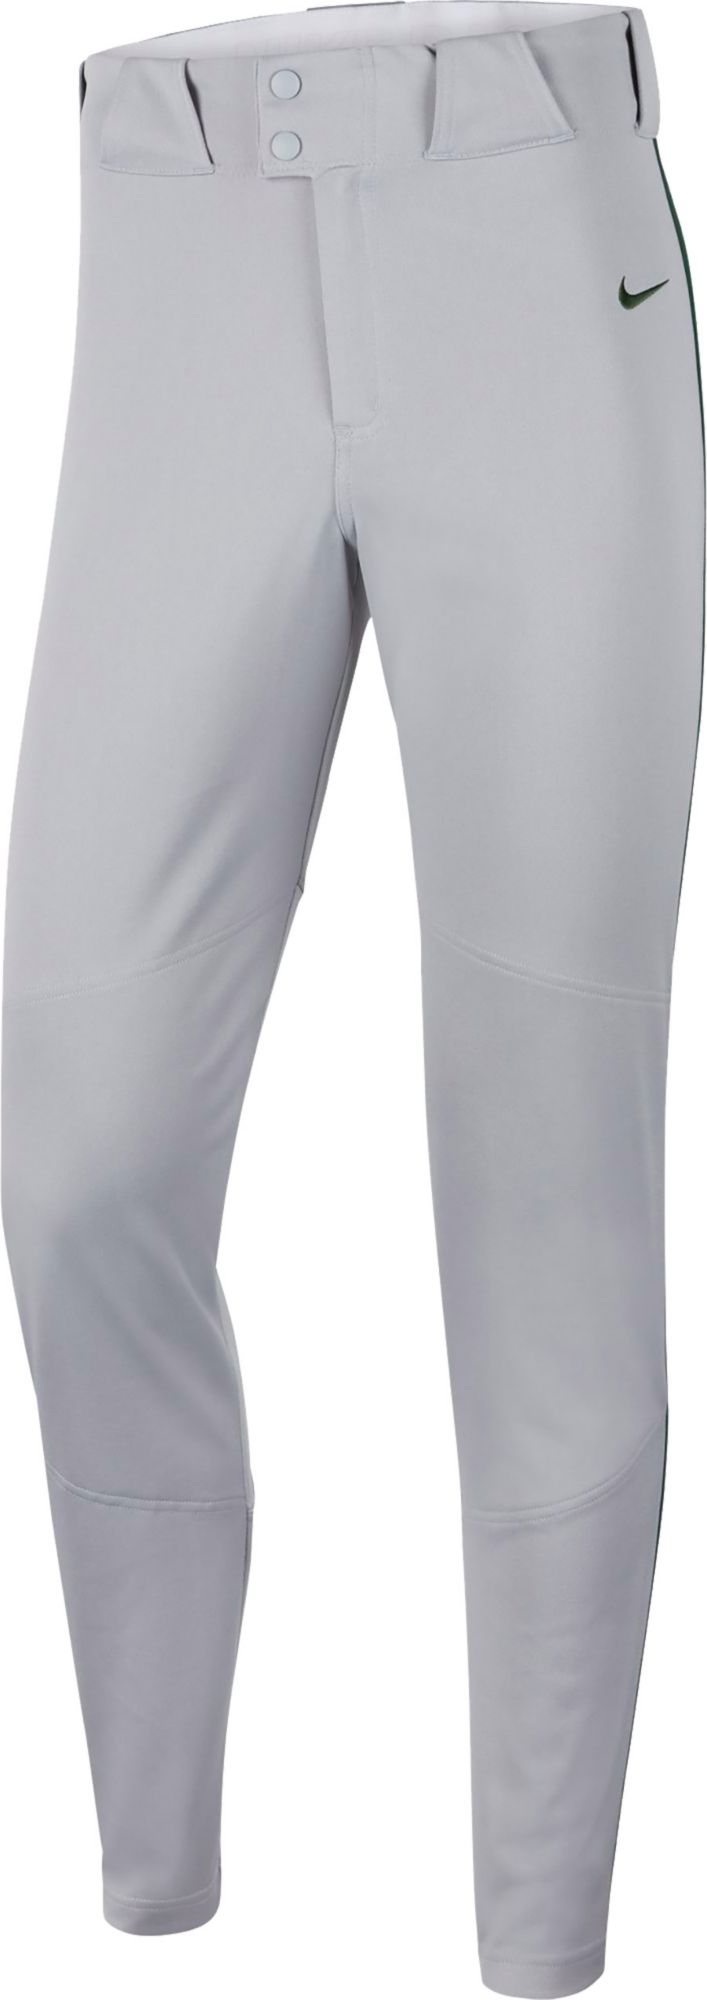 Nike Vapor Select Piped Men's Baseball Pants (Gray/Black